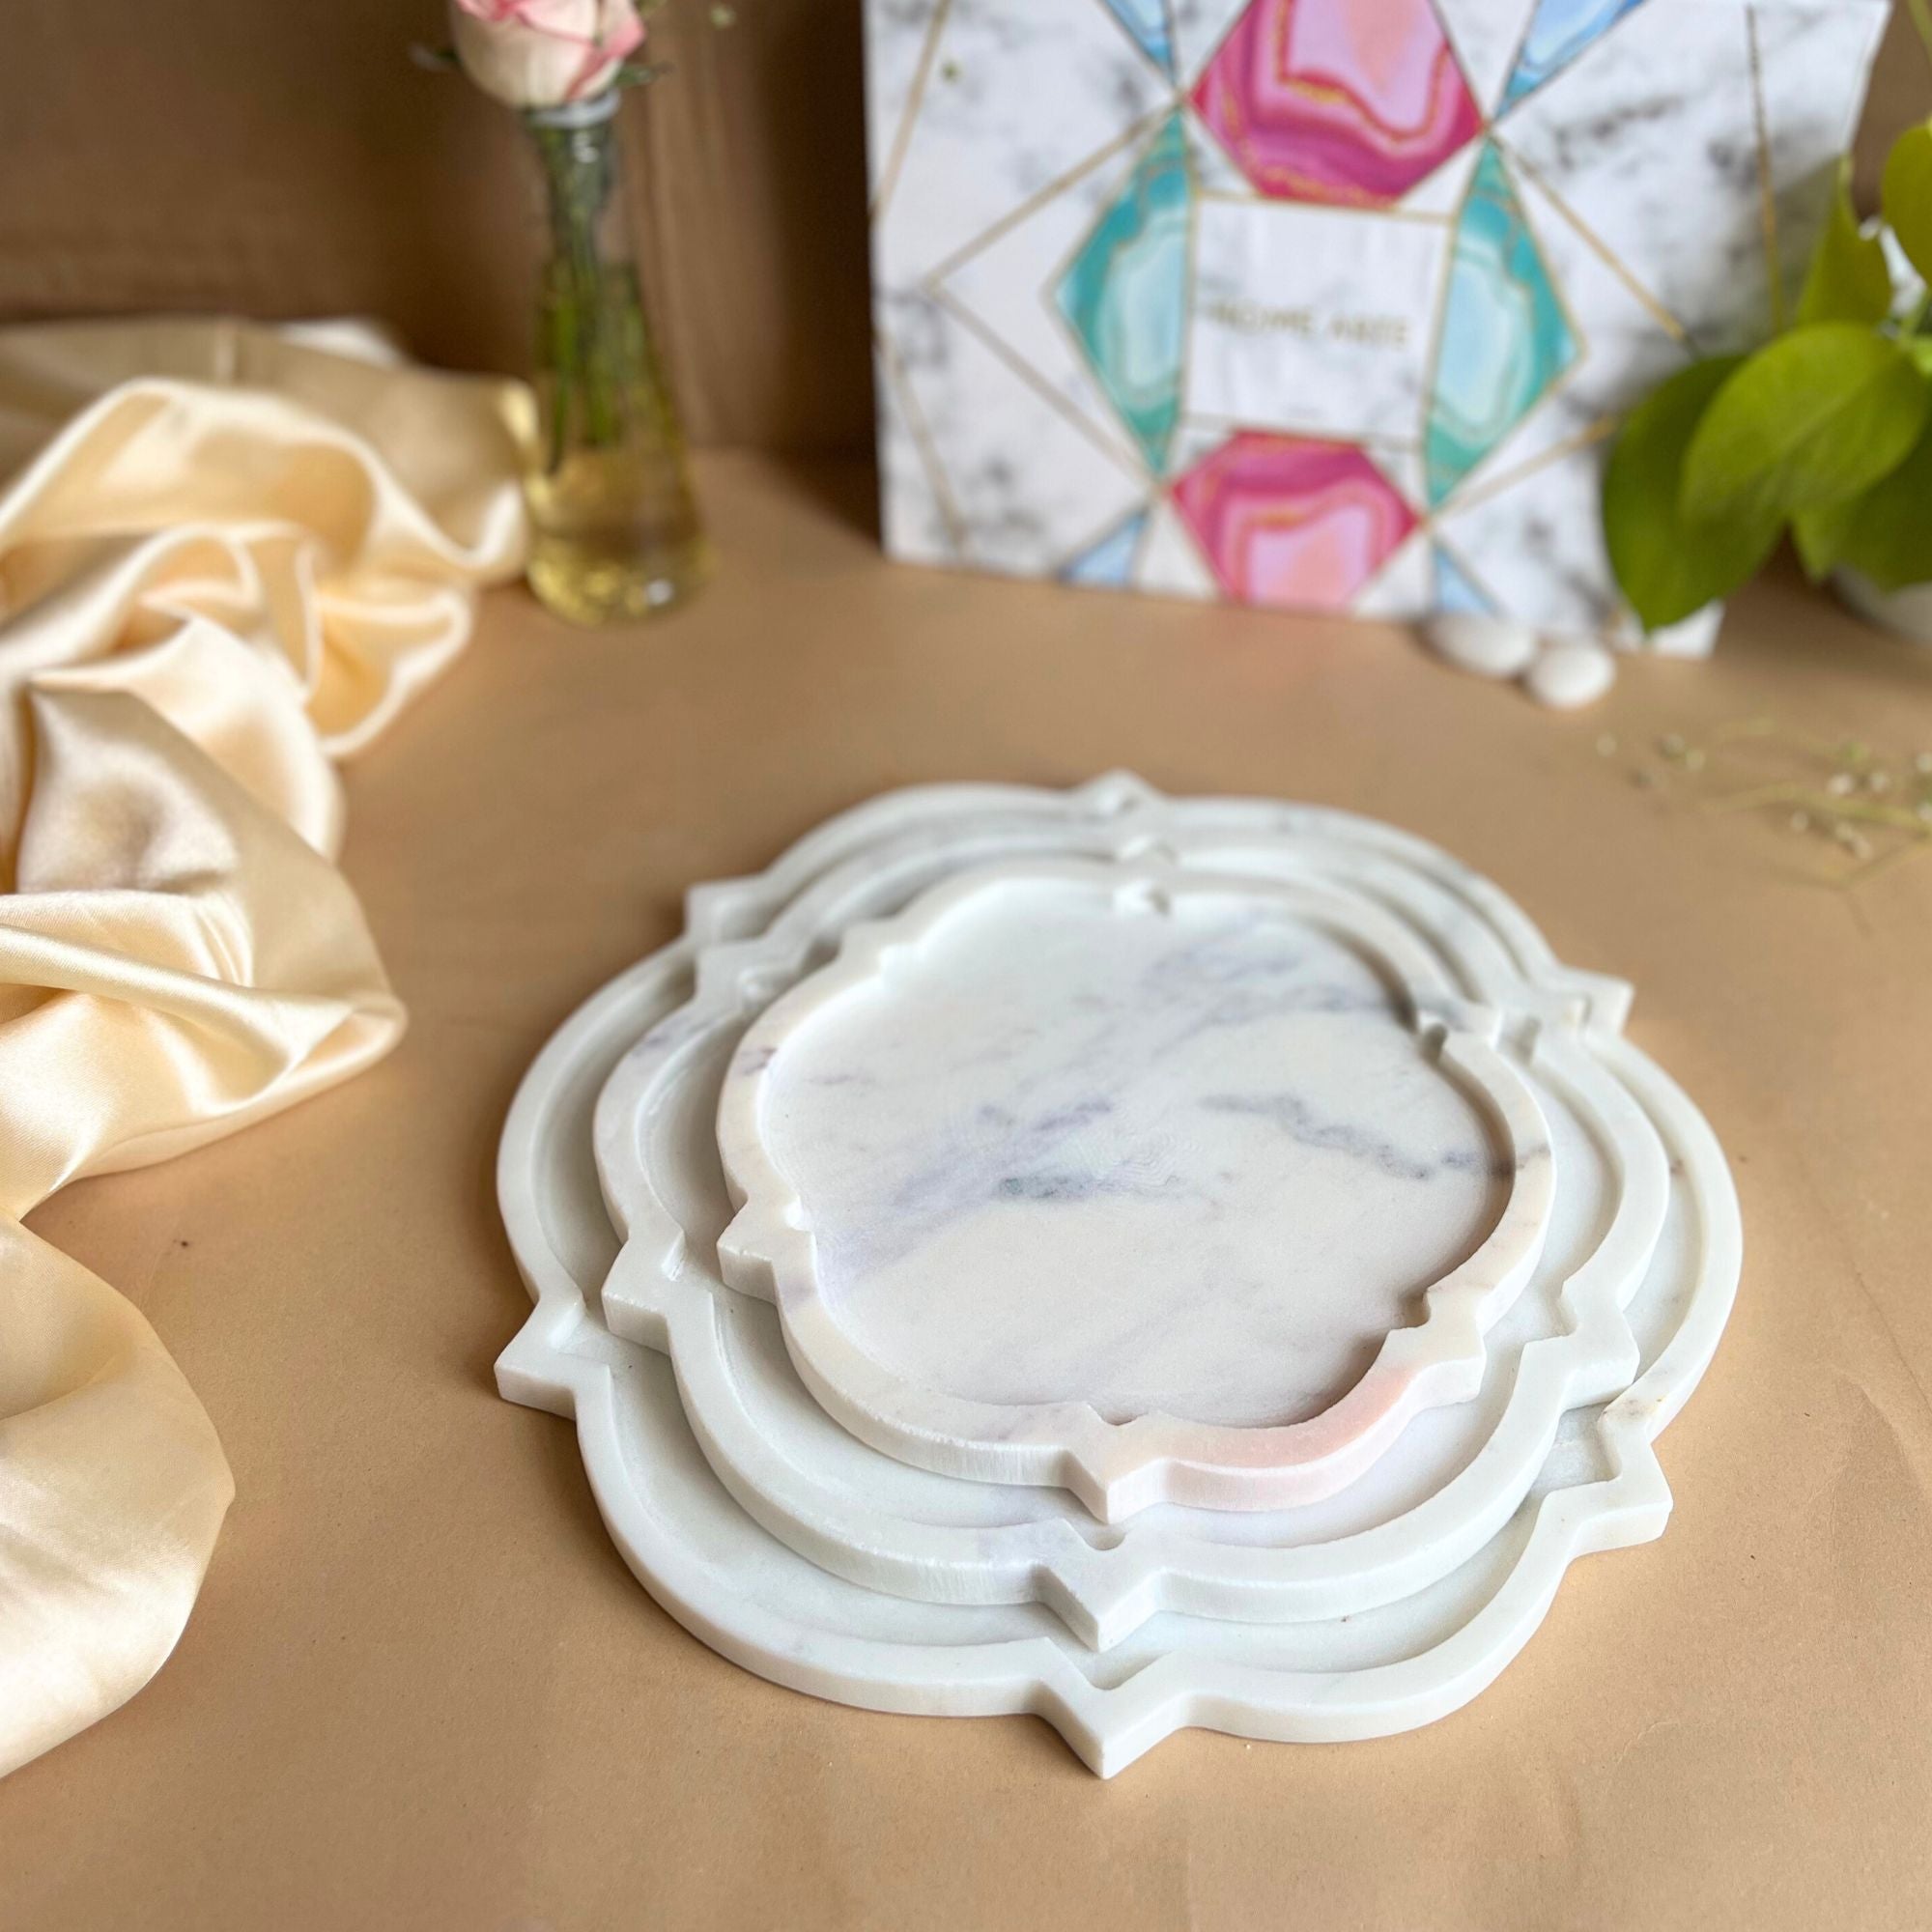 Decorative Platters